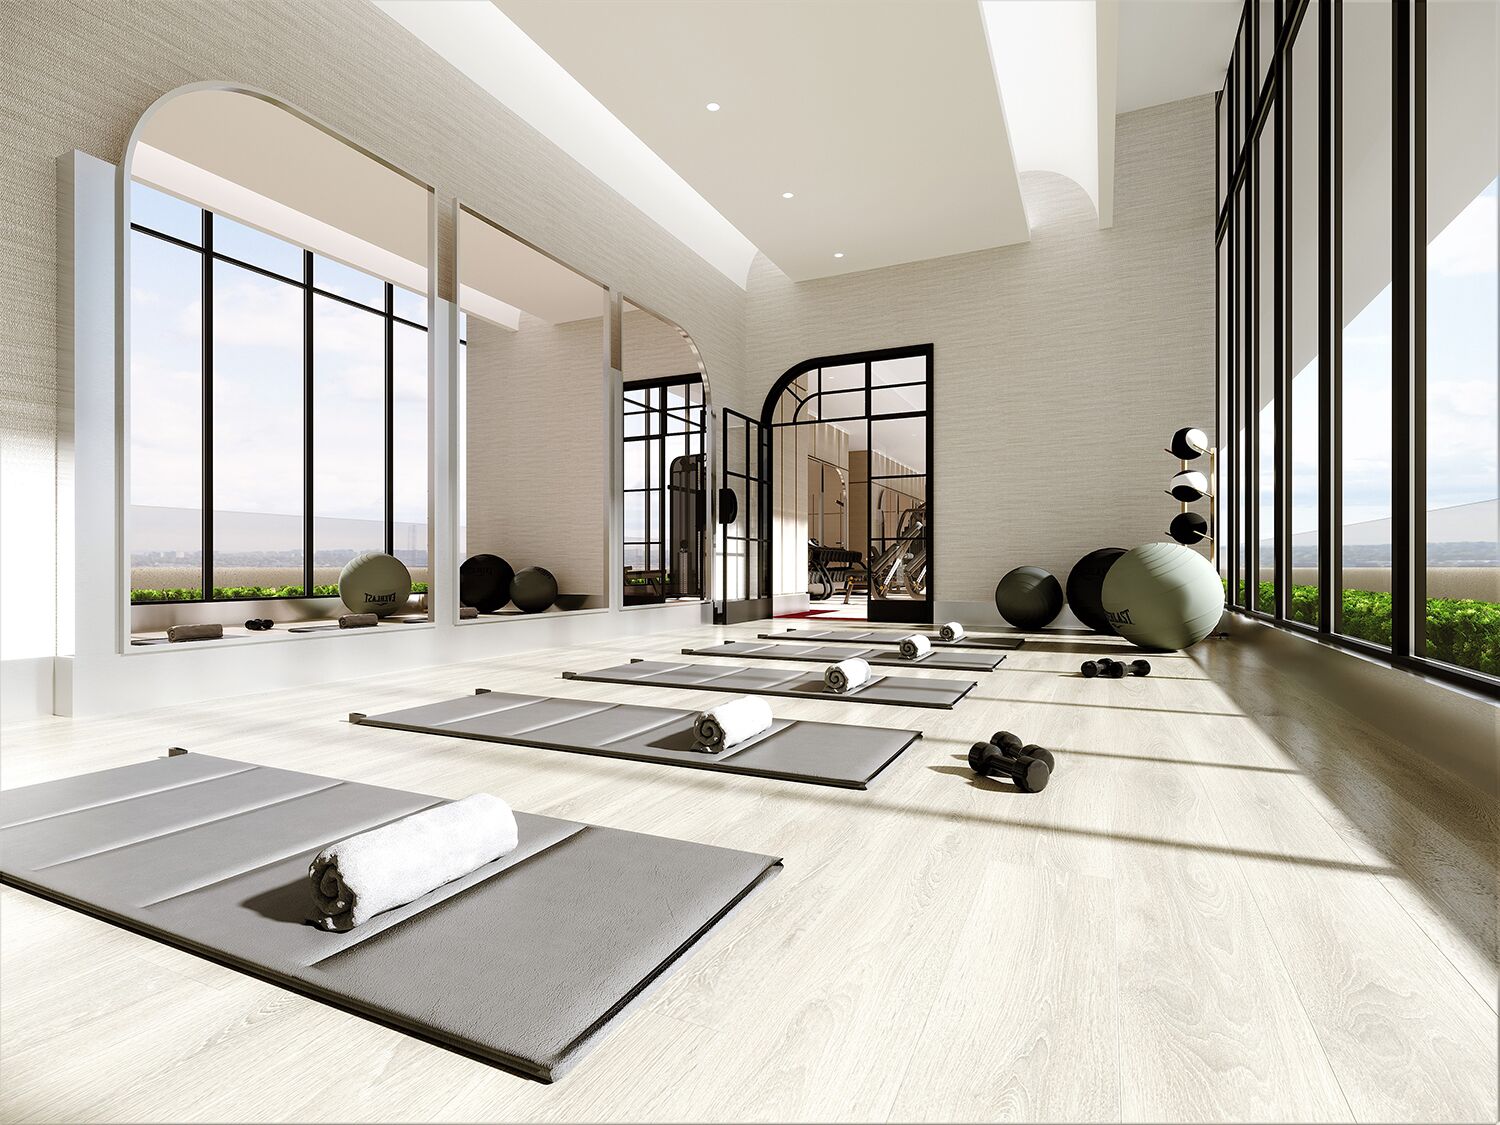 Interior Amenity Rendering - Gym Yoga Fitness Center